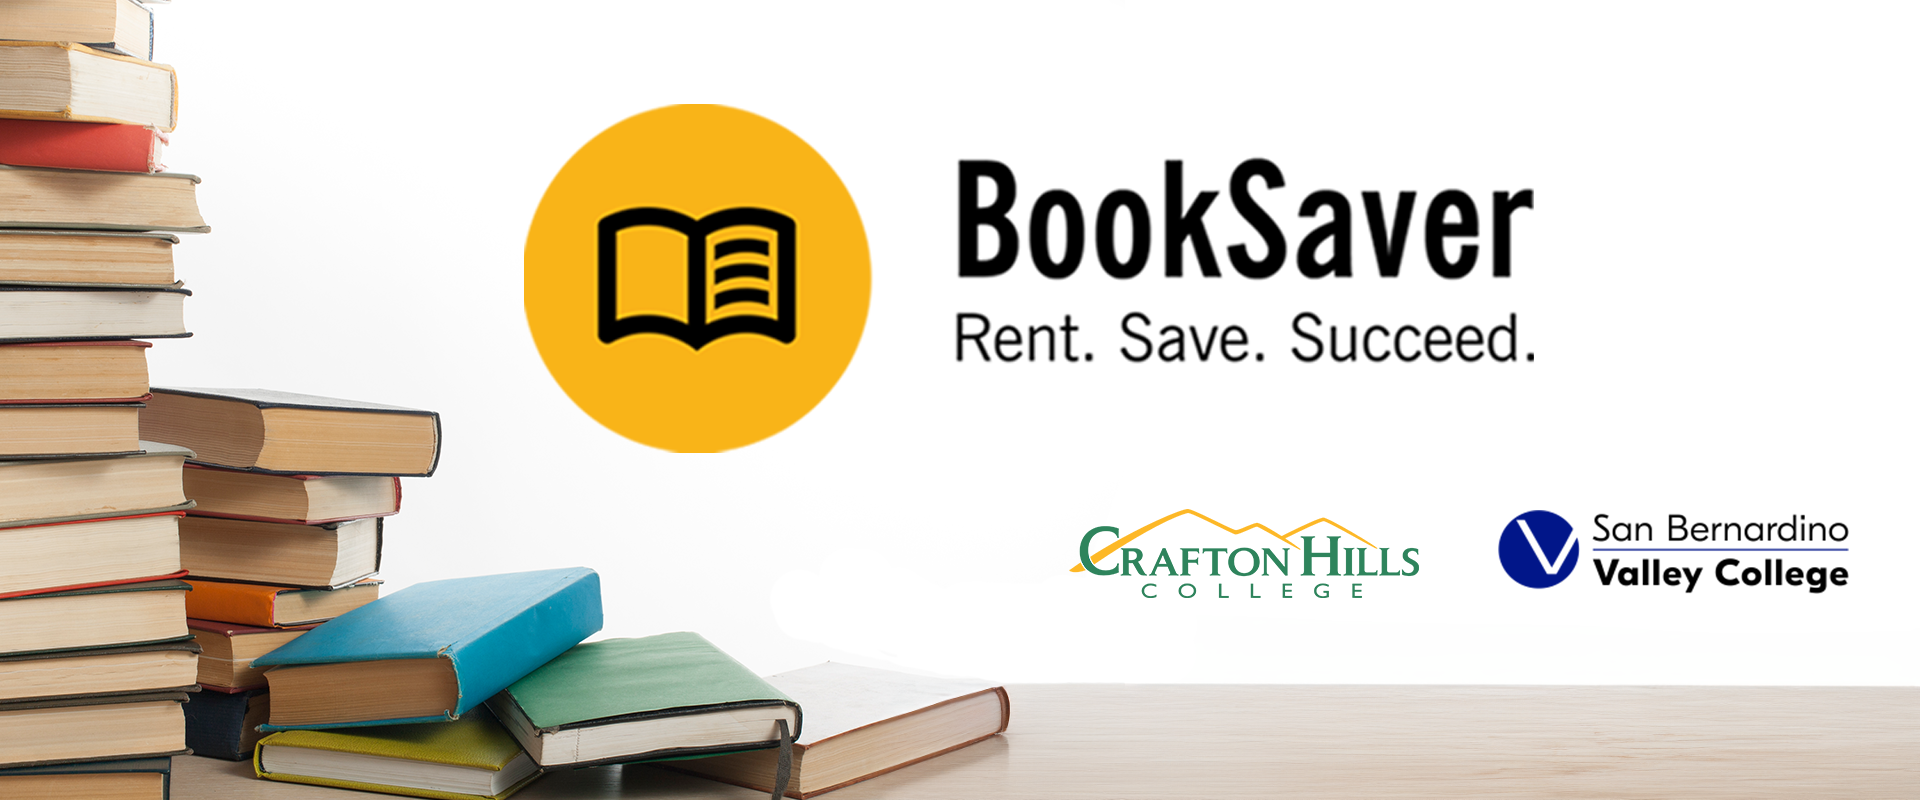 BookSaver: Rent. Save. Succeed.